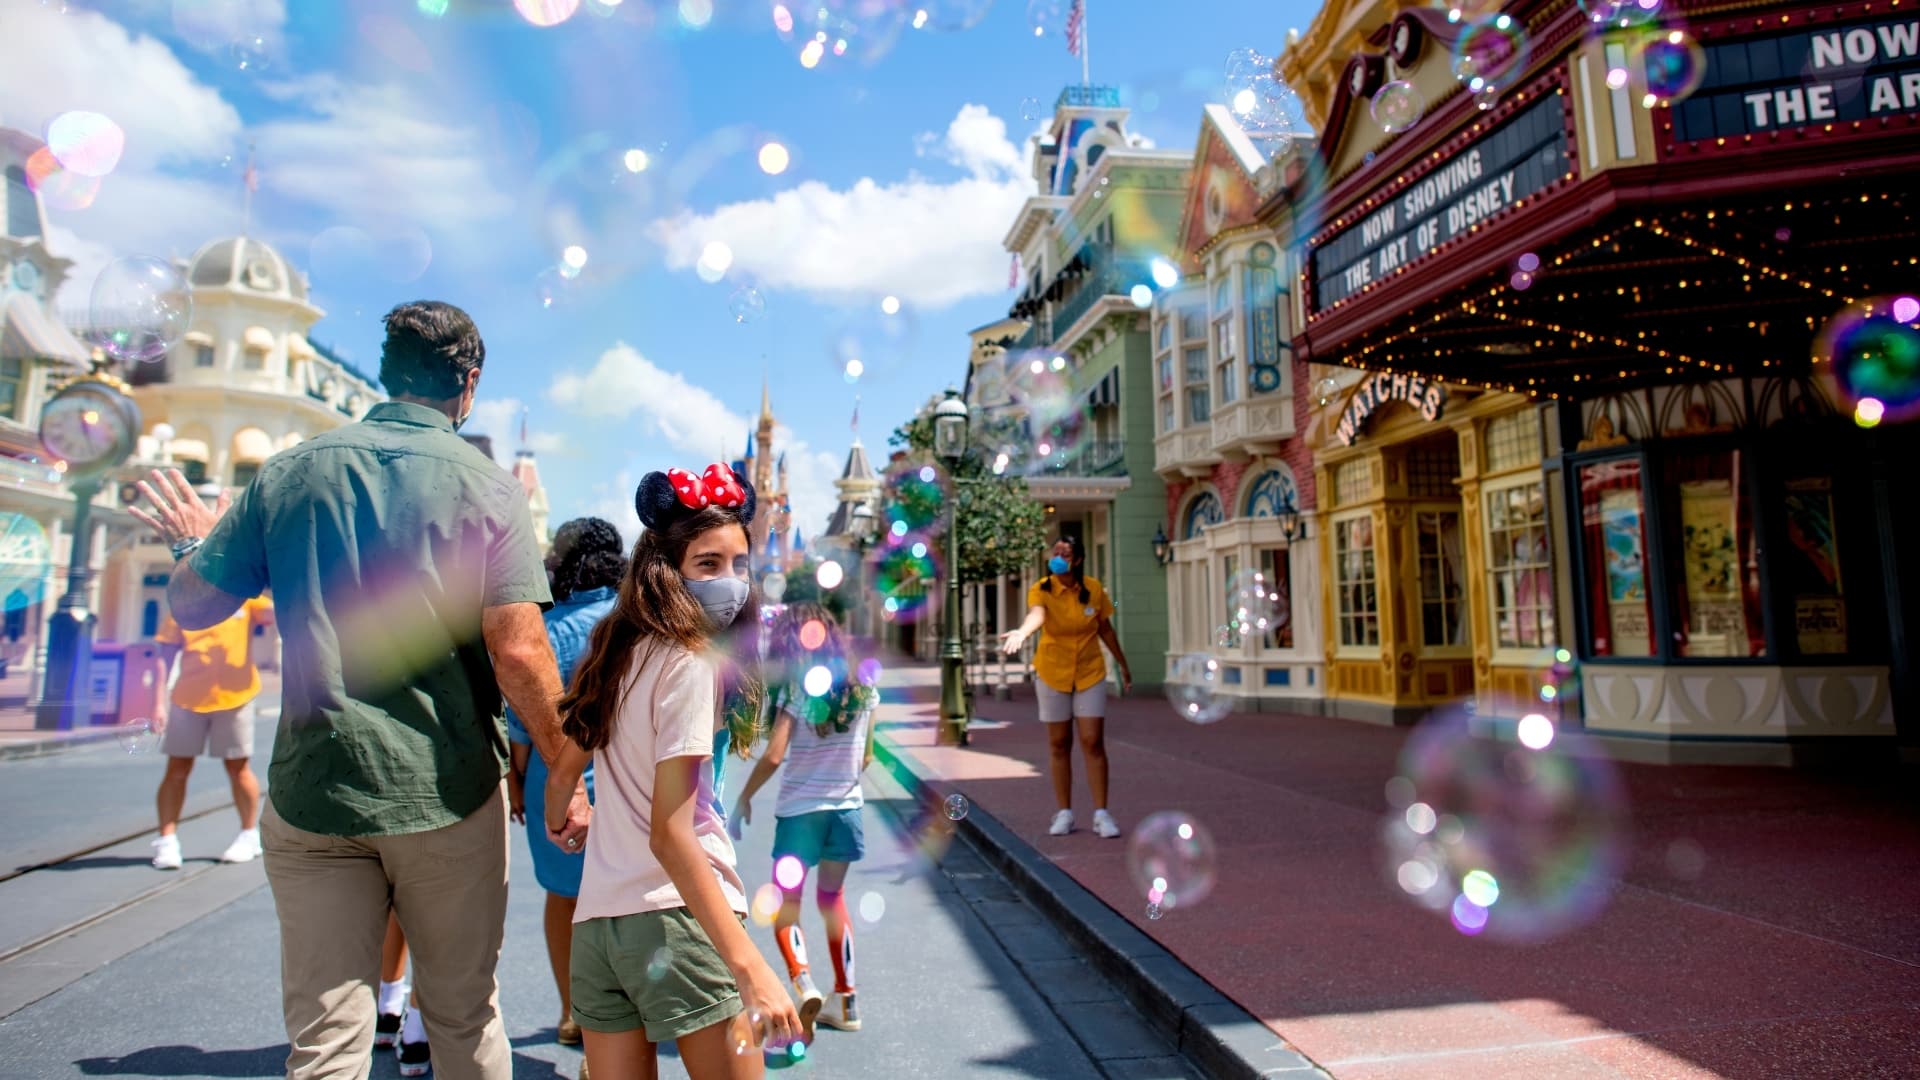 Main Street USA at Disney World in Orlando